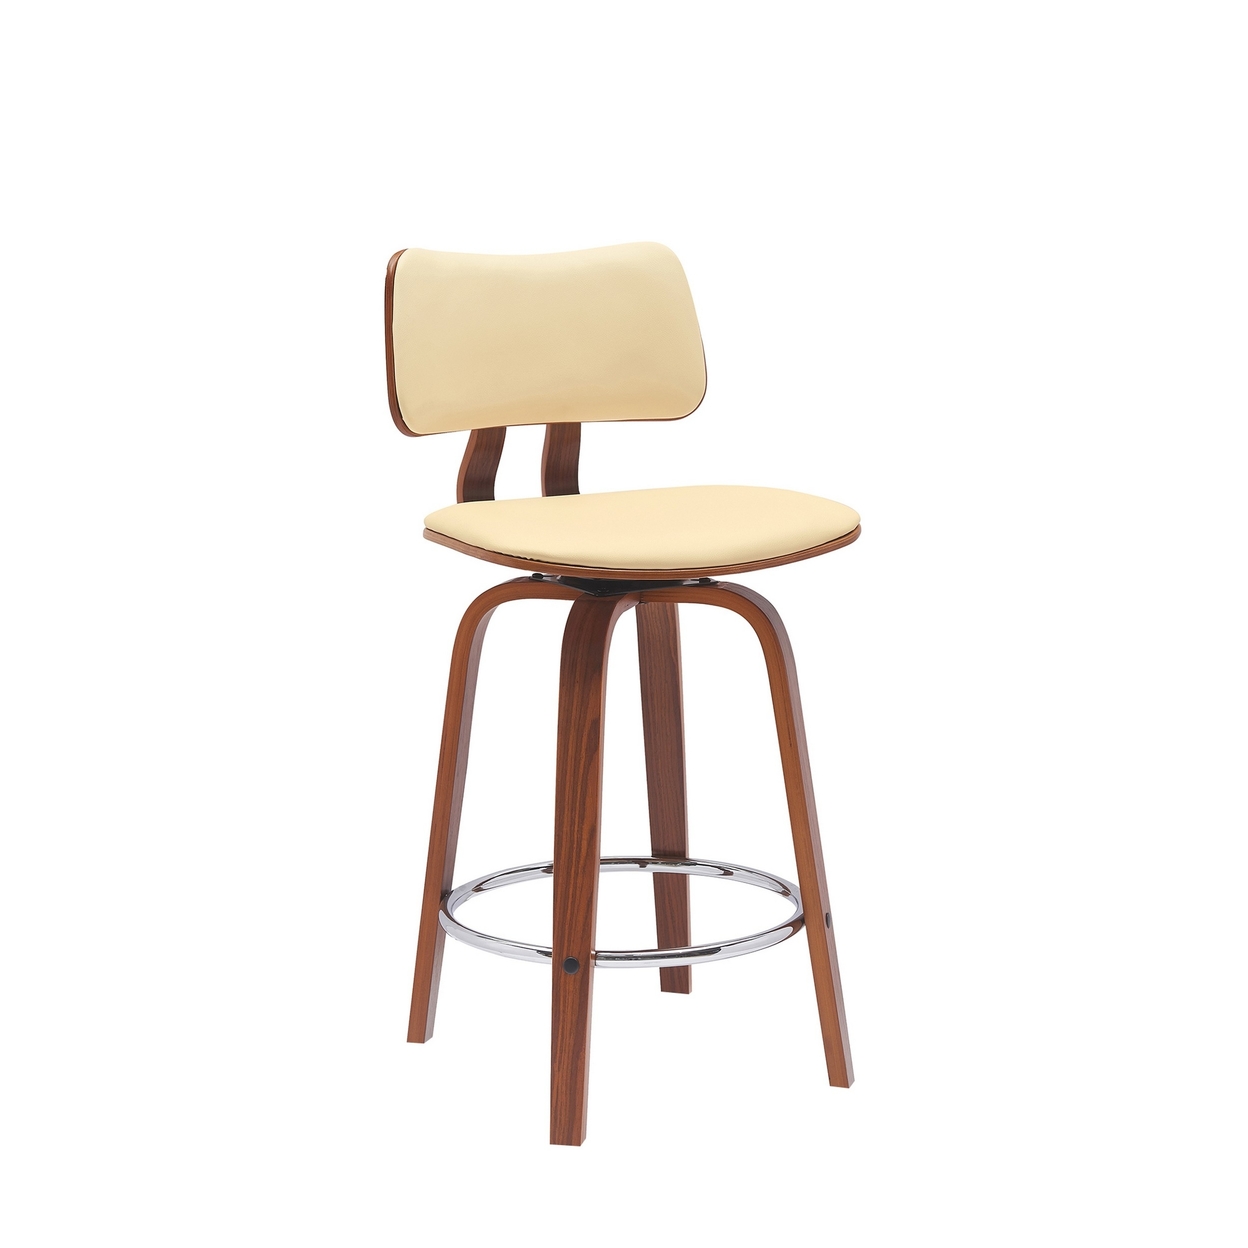 Pino 26 Inch Swivel Counter Stool Chair, Cream Faux Leather, Walnut Brown - Saltoro Sherpi